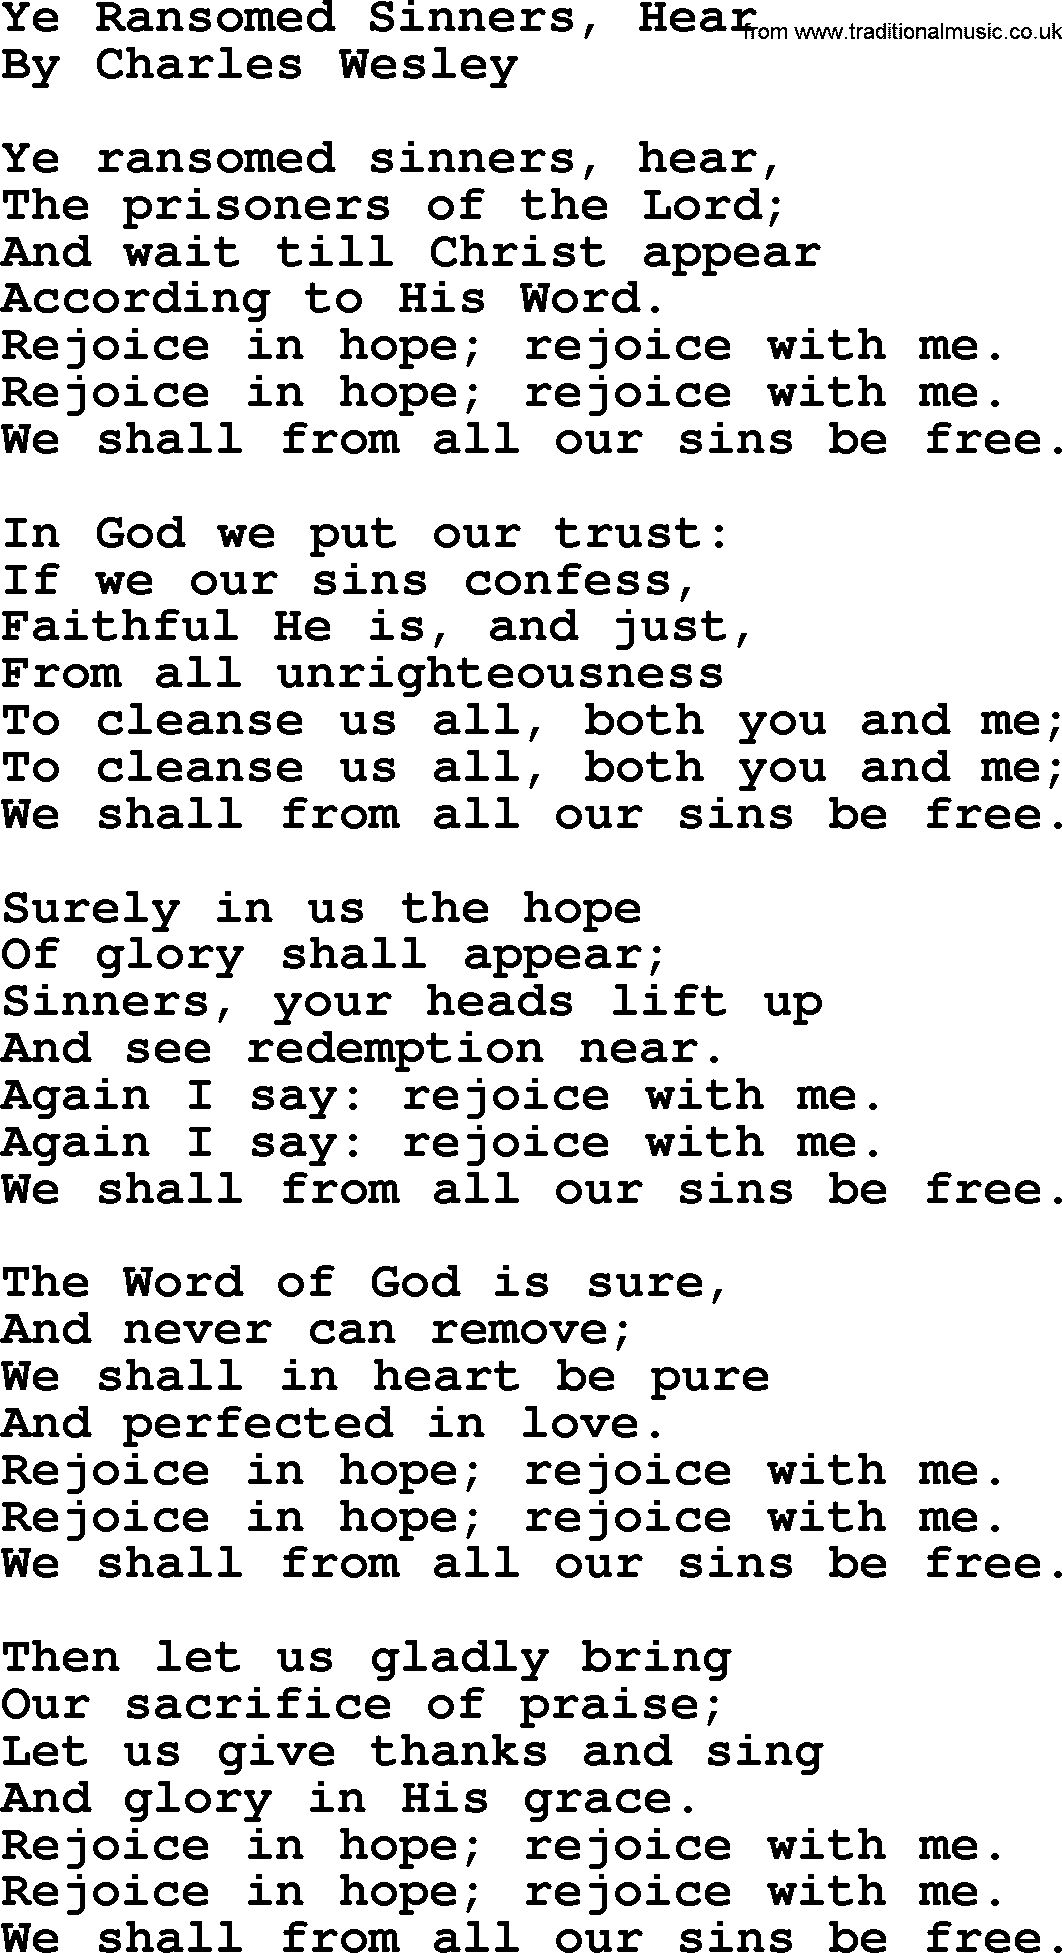 Charles Wesley hymn: Ye Ransomed Sinners, Hear, lyrics